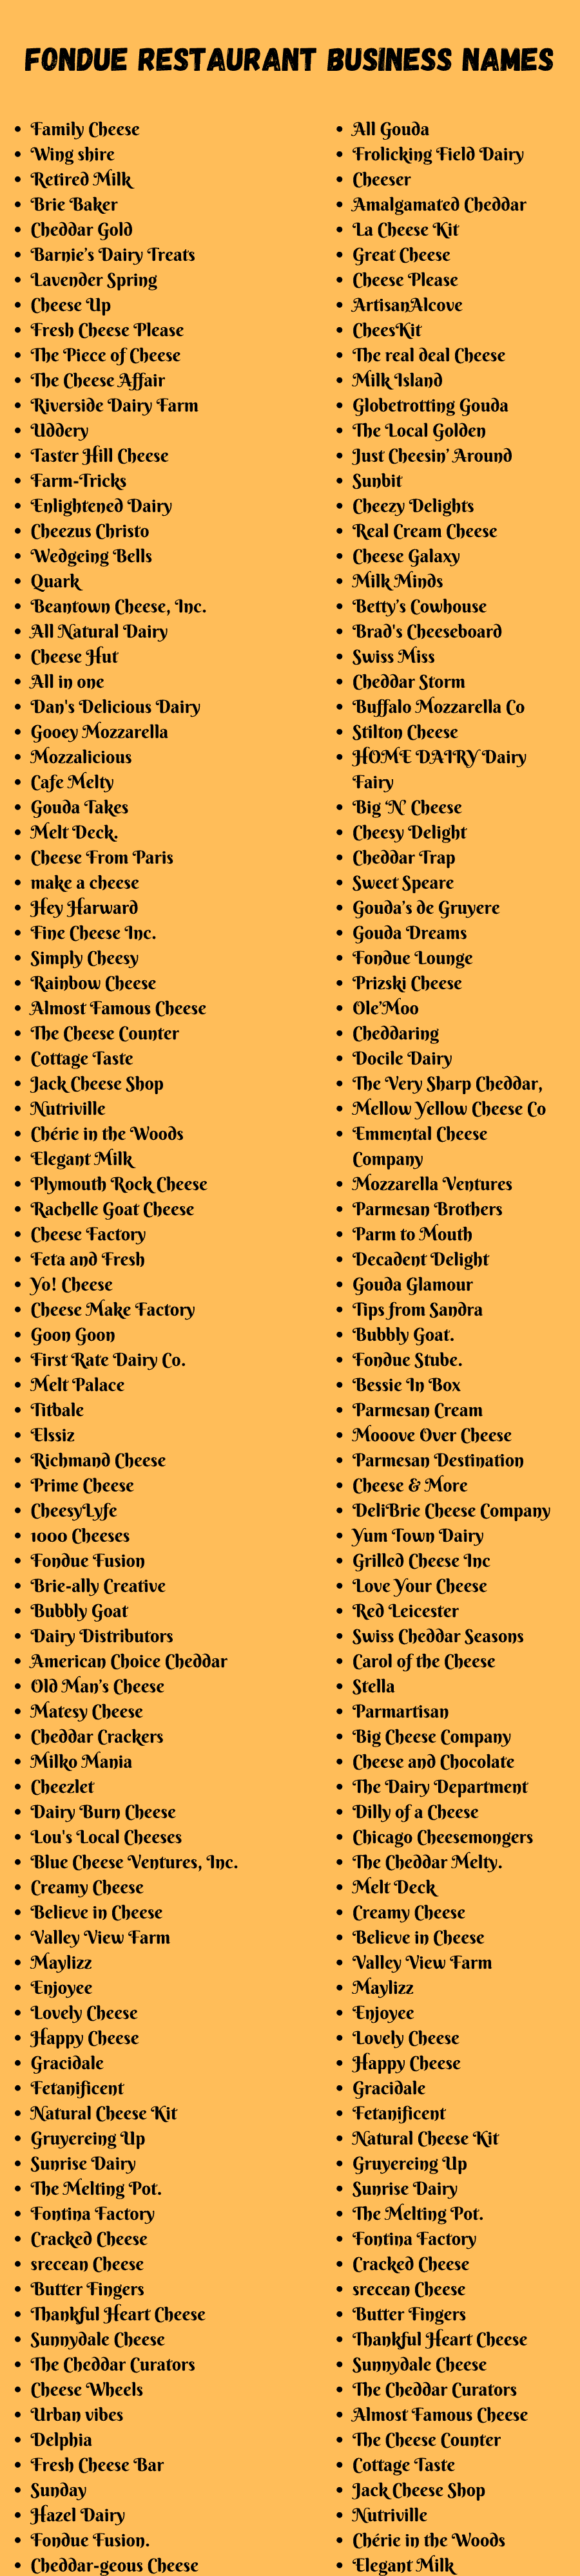 Fondue Restaurant Business Names